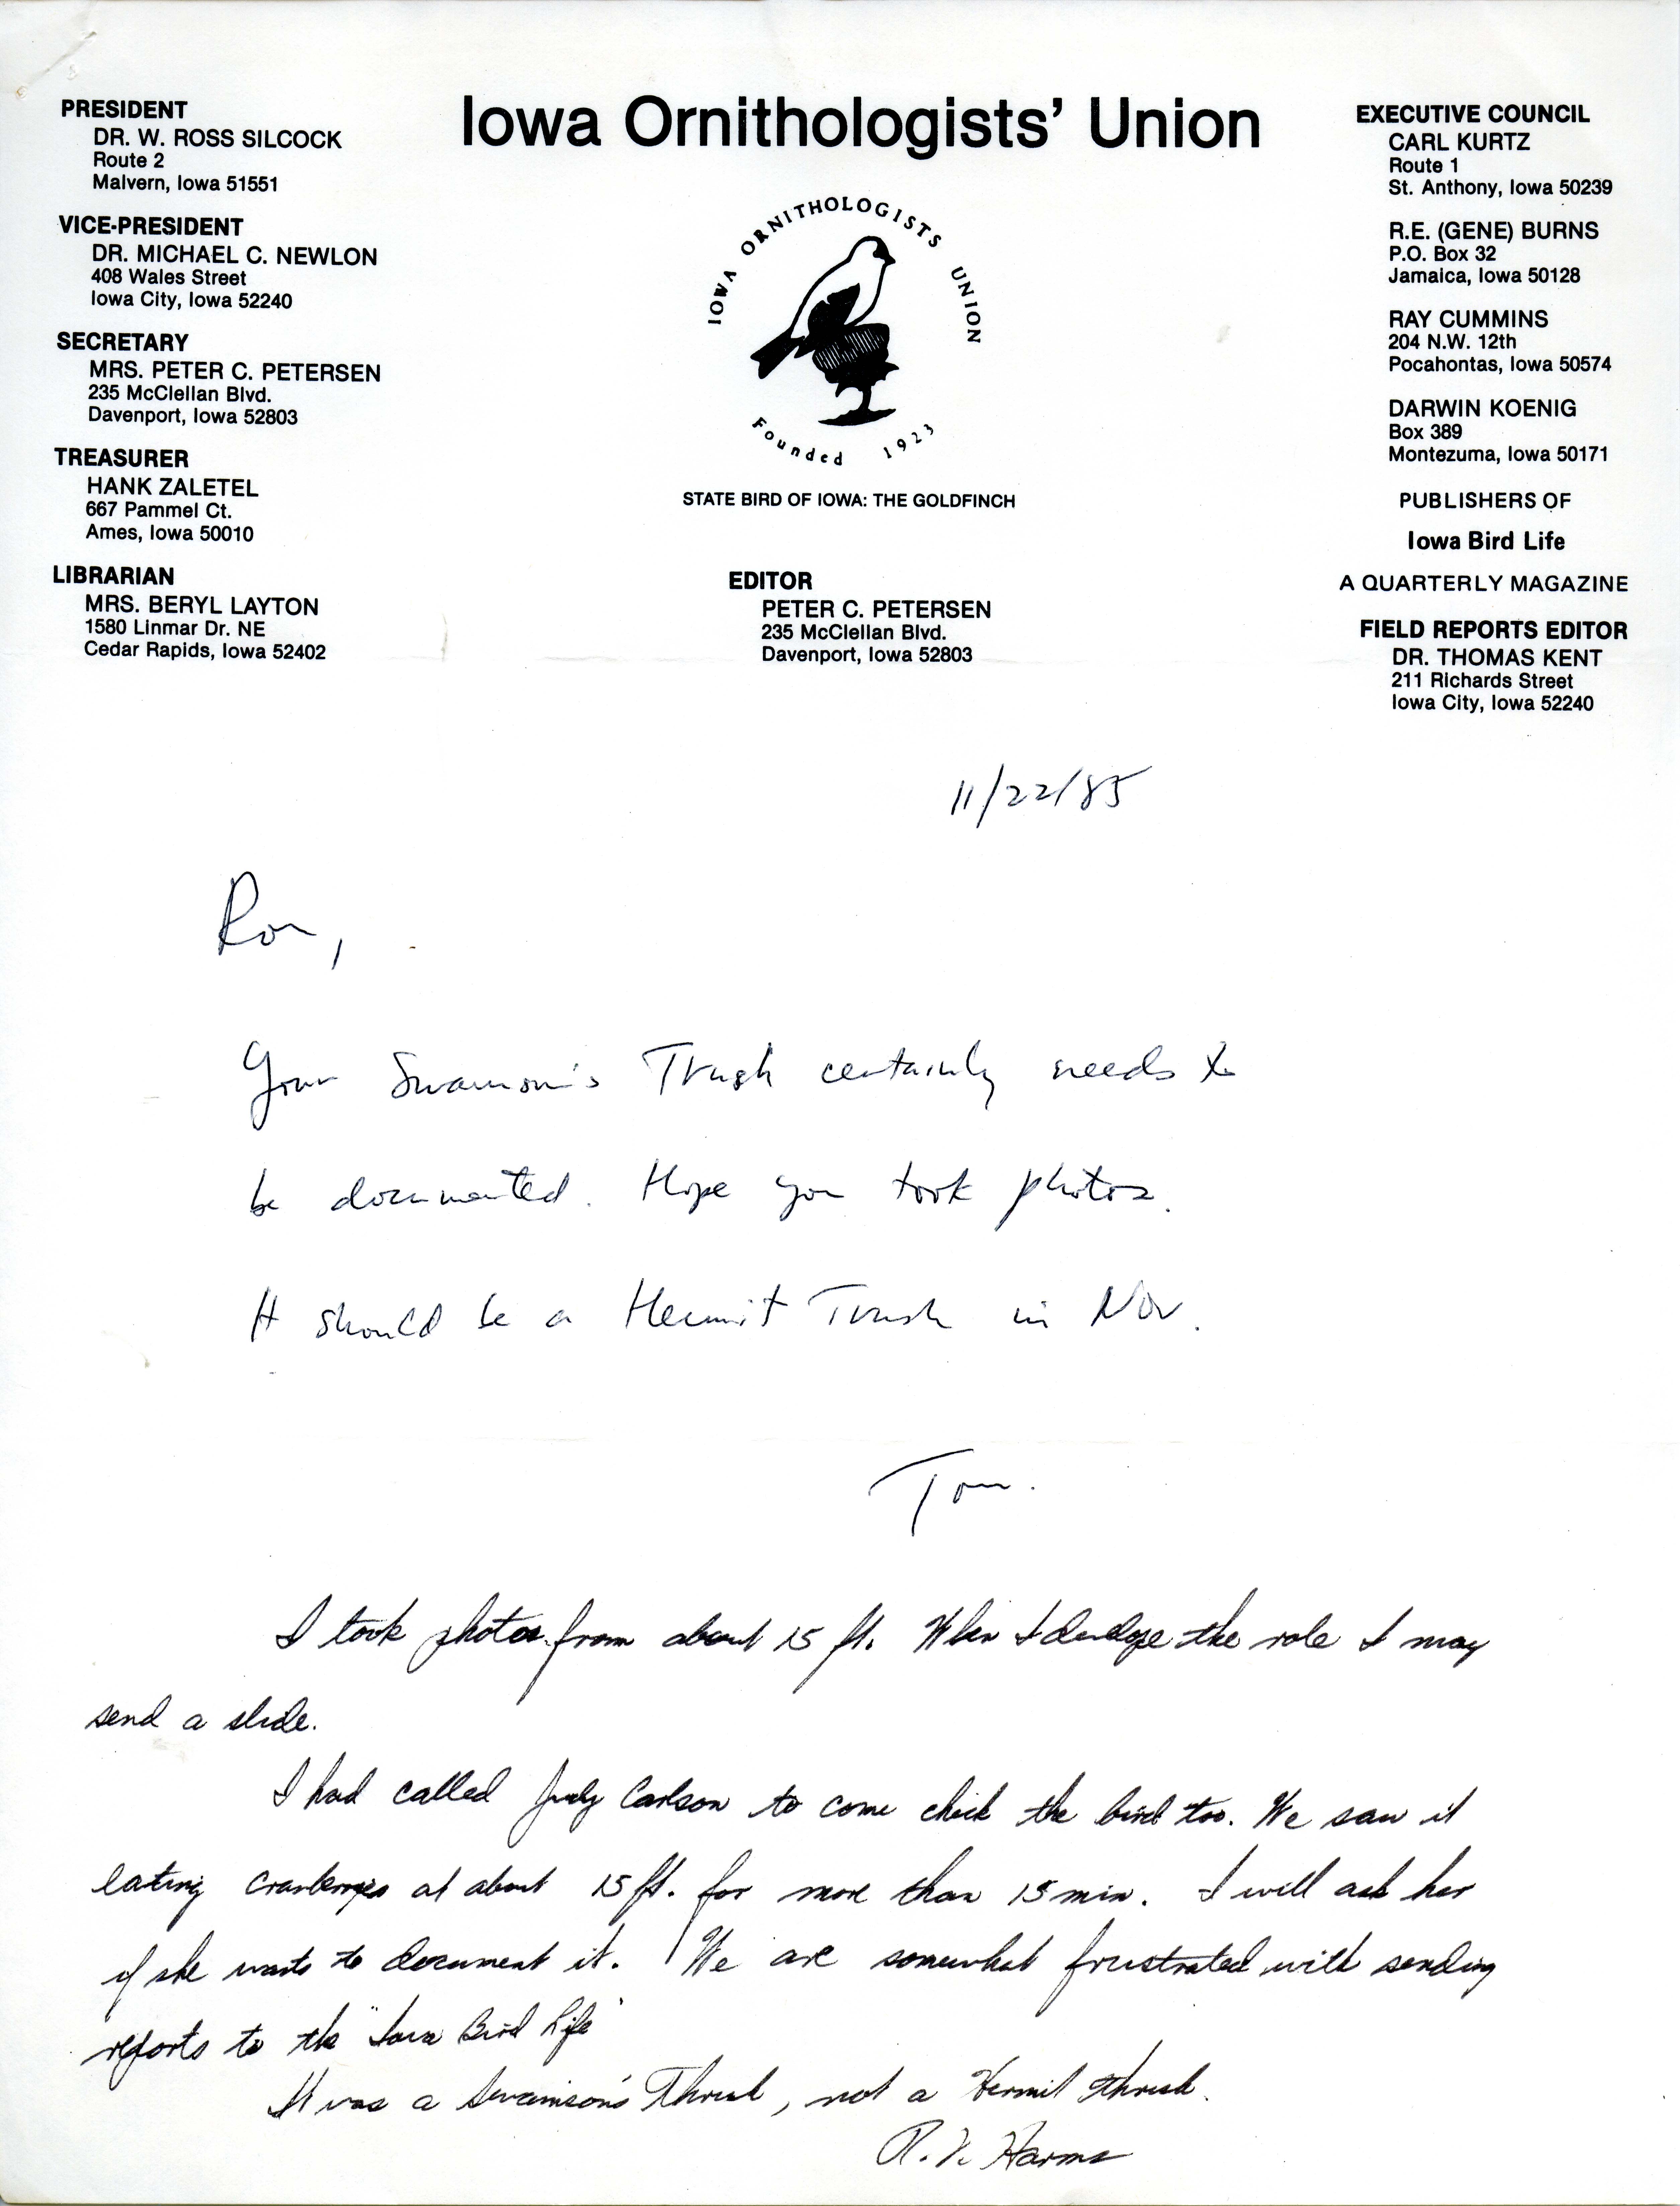 Thomas Kent letter to Ronald Harms regarding Swainson's Thrush, November 22, 1985